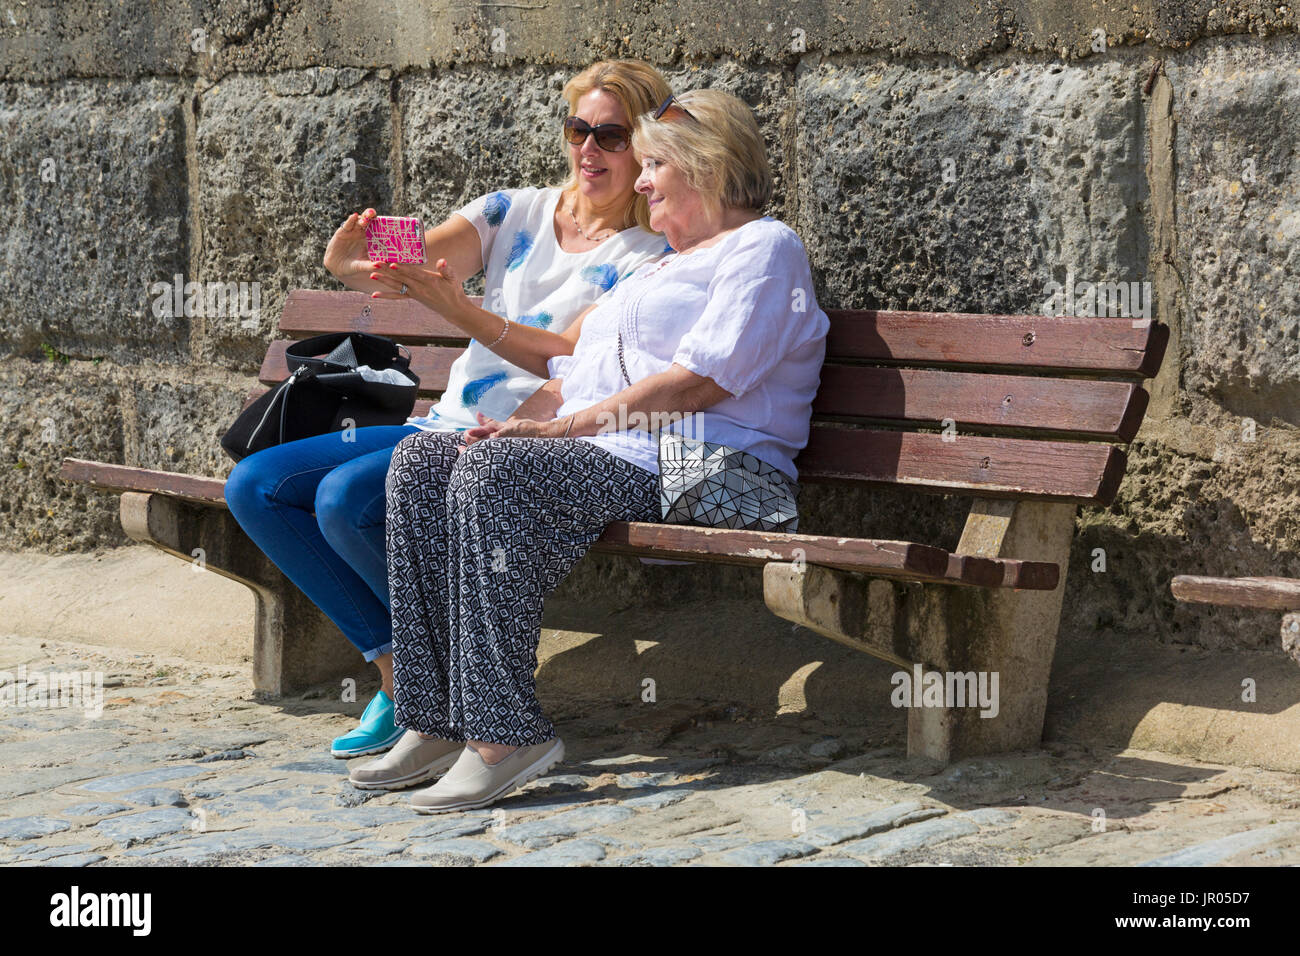 Two women sitting on bench taking selfie at Lyme Regis, Dorset UK in July Stock Photo